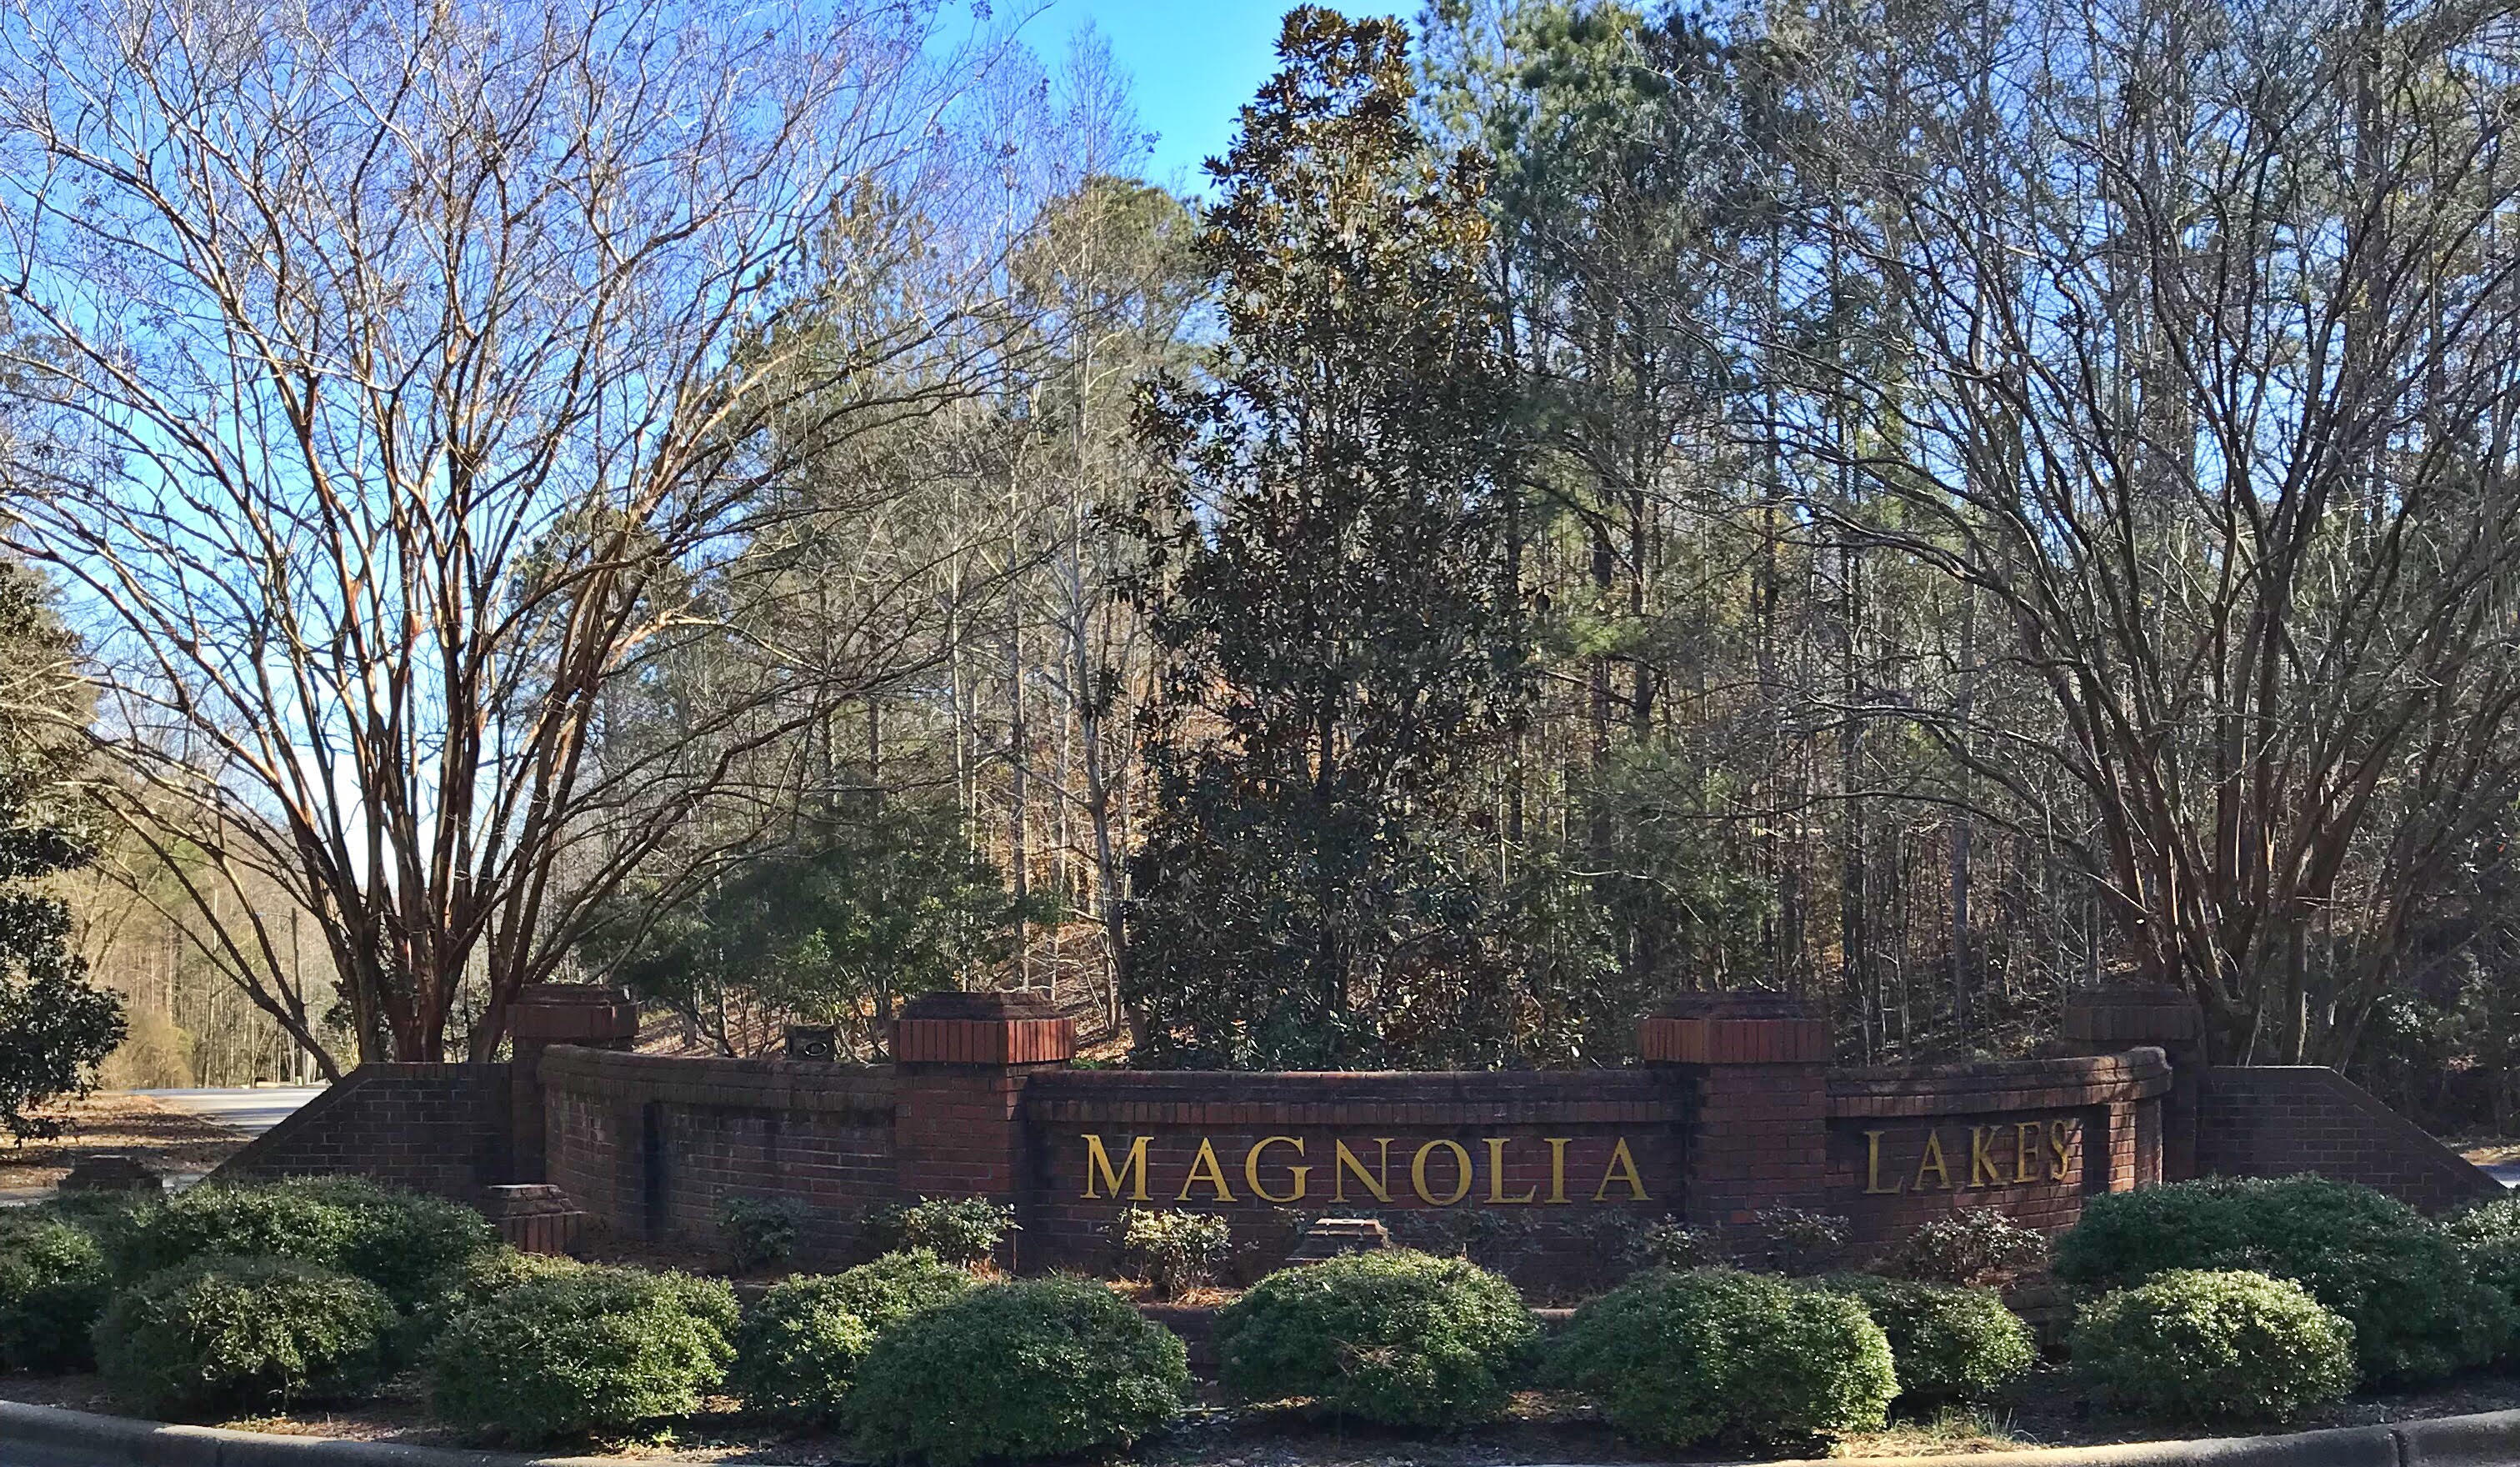 Magnolia Lakes Homes for Sale in Auburn AL